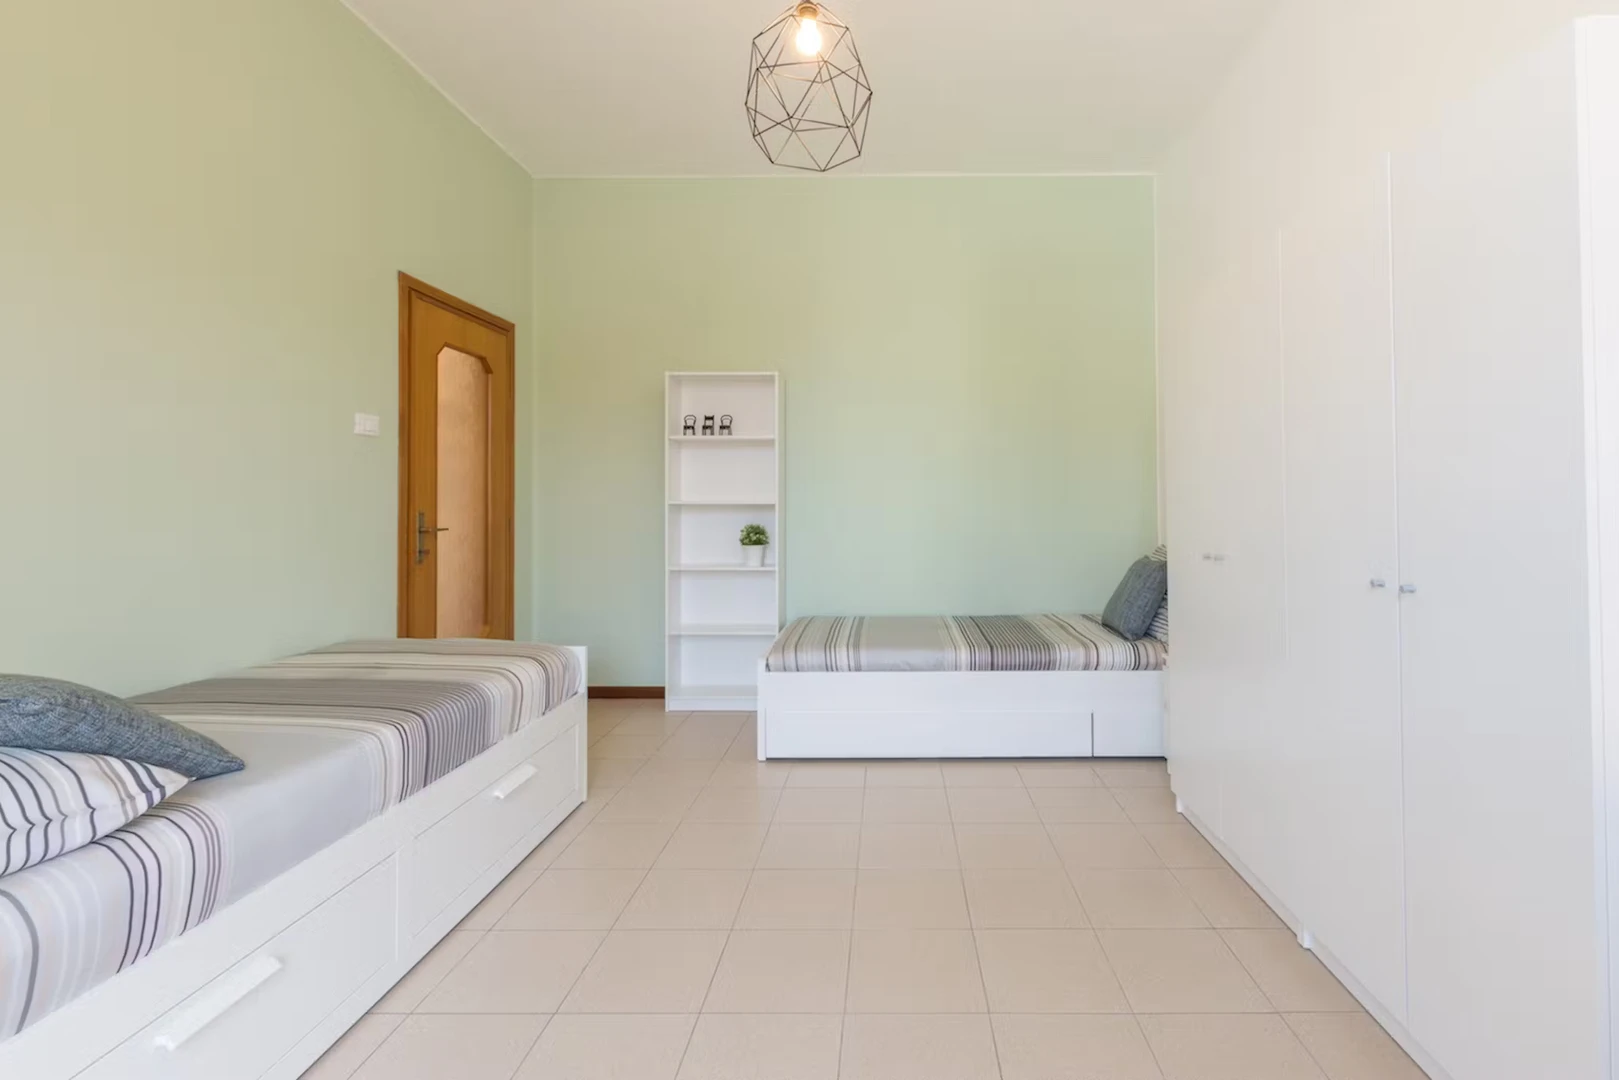 Cheap shared room in Ferrara